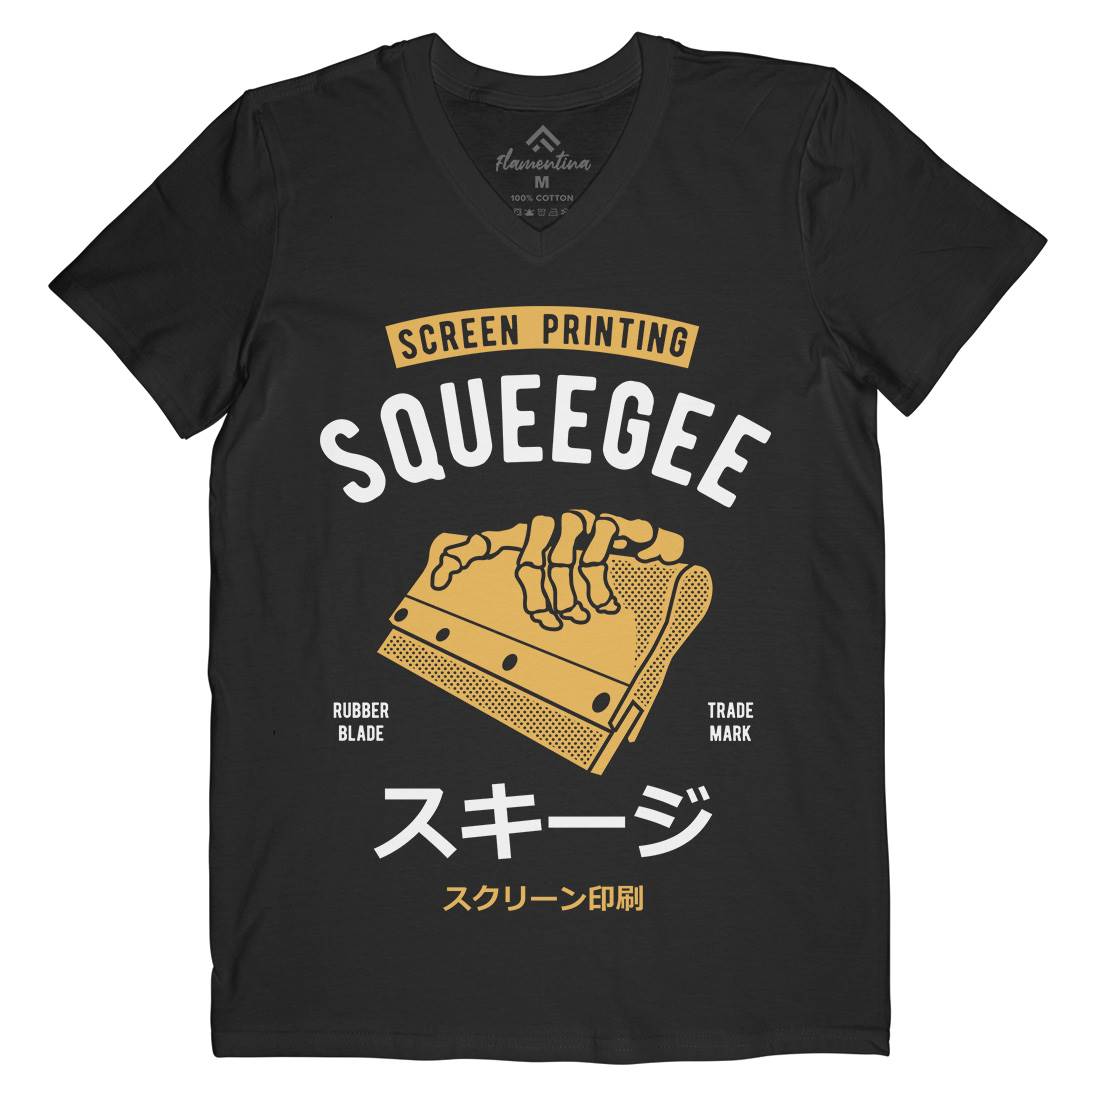 Squeegee Social Club Mens Organic V-Neck T-Shirt Work A282